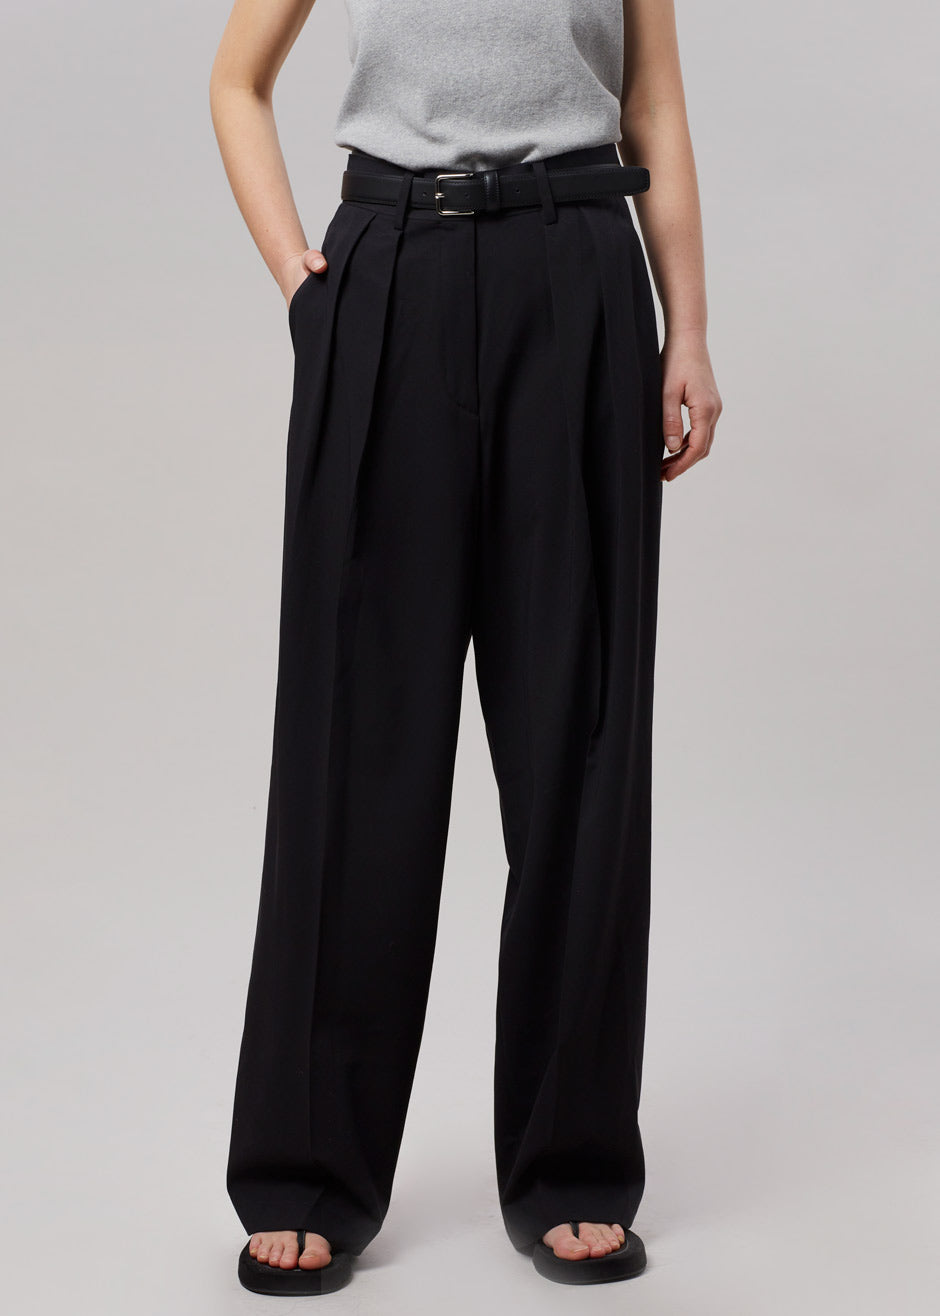 Pleated trousers - Black - Ladies | H&M IN